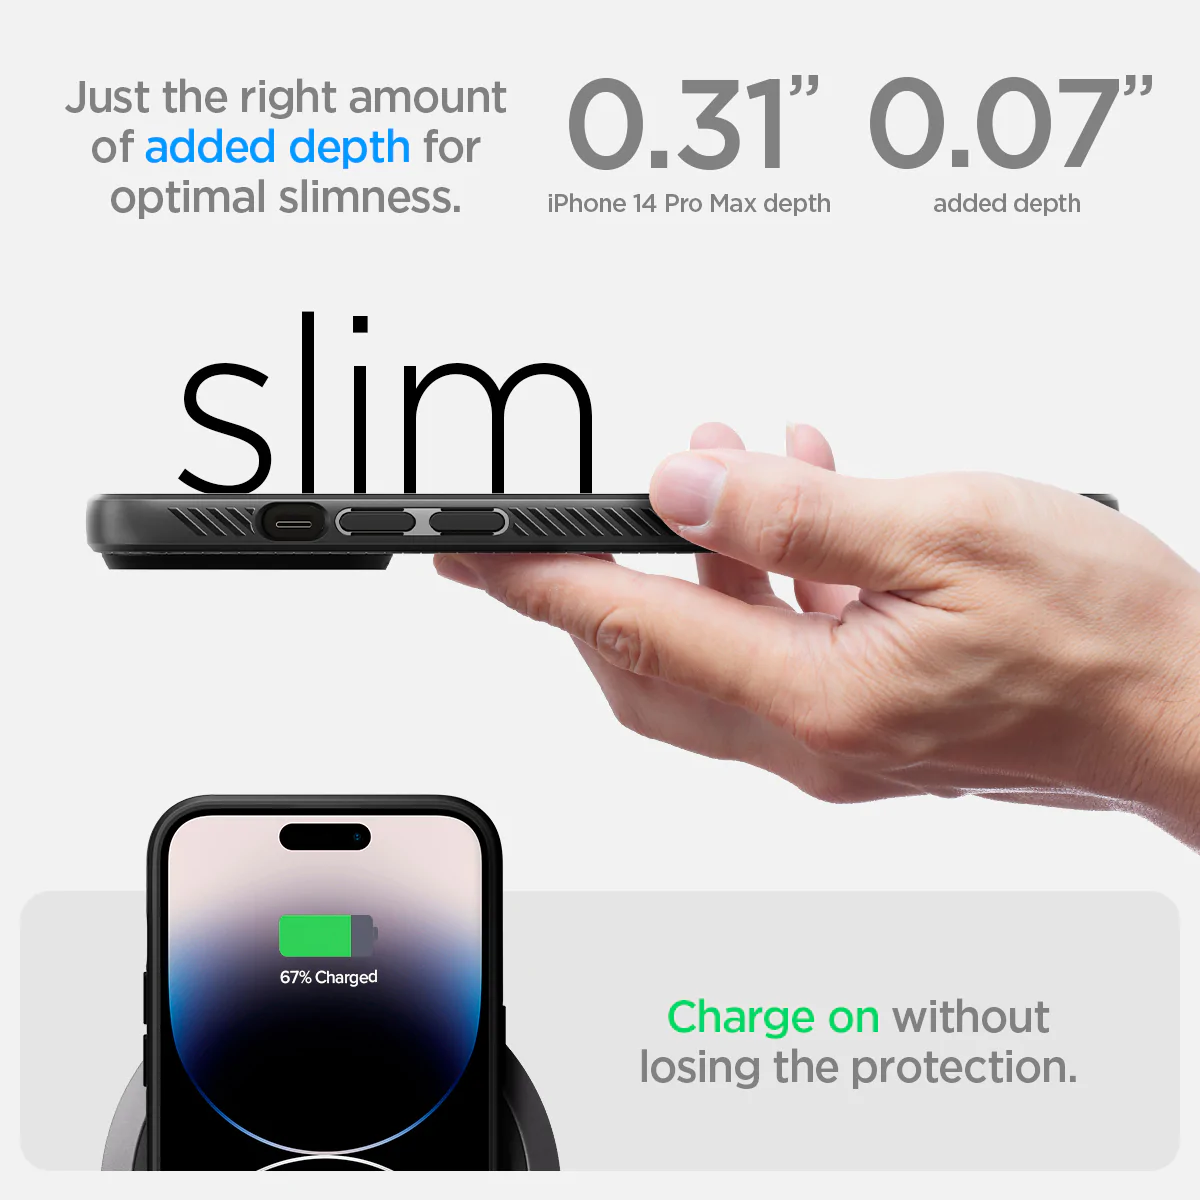 Spigen iPhone 14 Pro Max Liquid Air Series-Matte Black